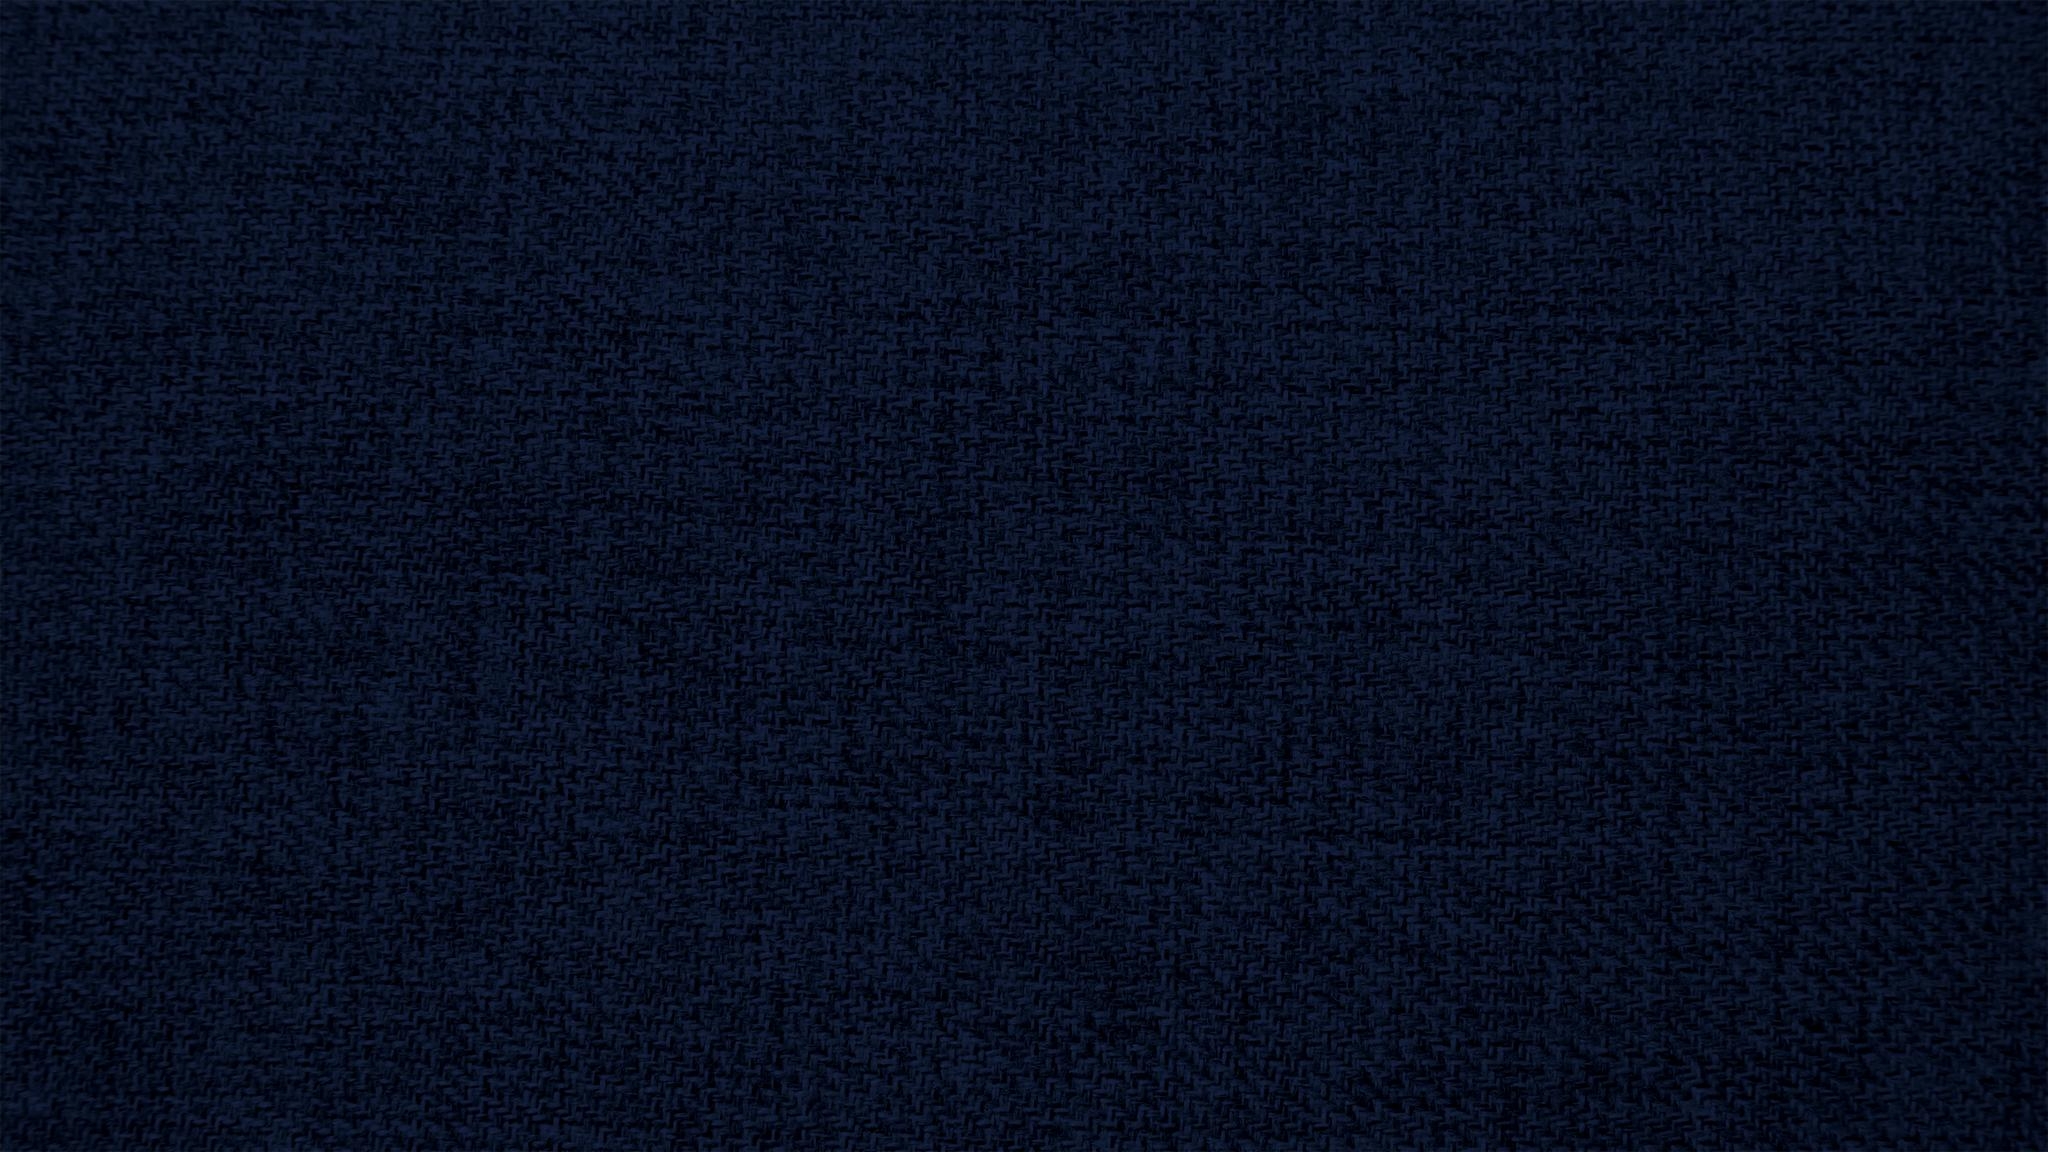 Blue Decorative Mid Century Modern Knife Edge Pillows 18 x 18 (Set of 2) - Royale Cobalt - Image 2